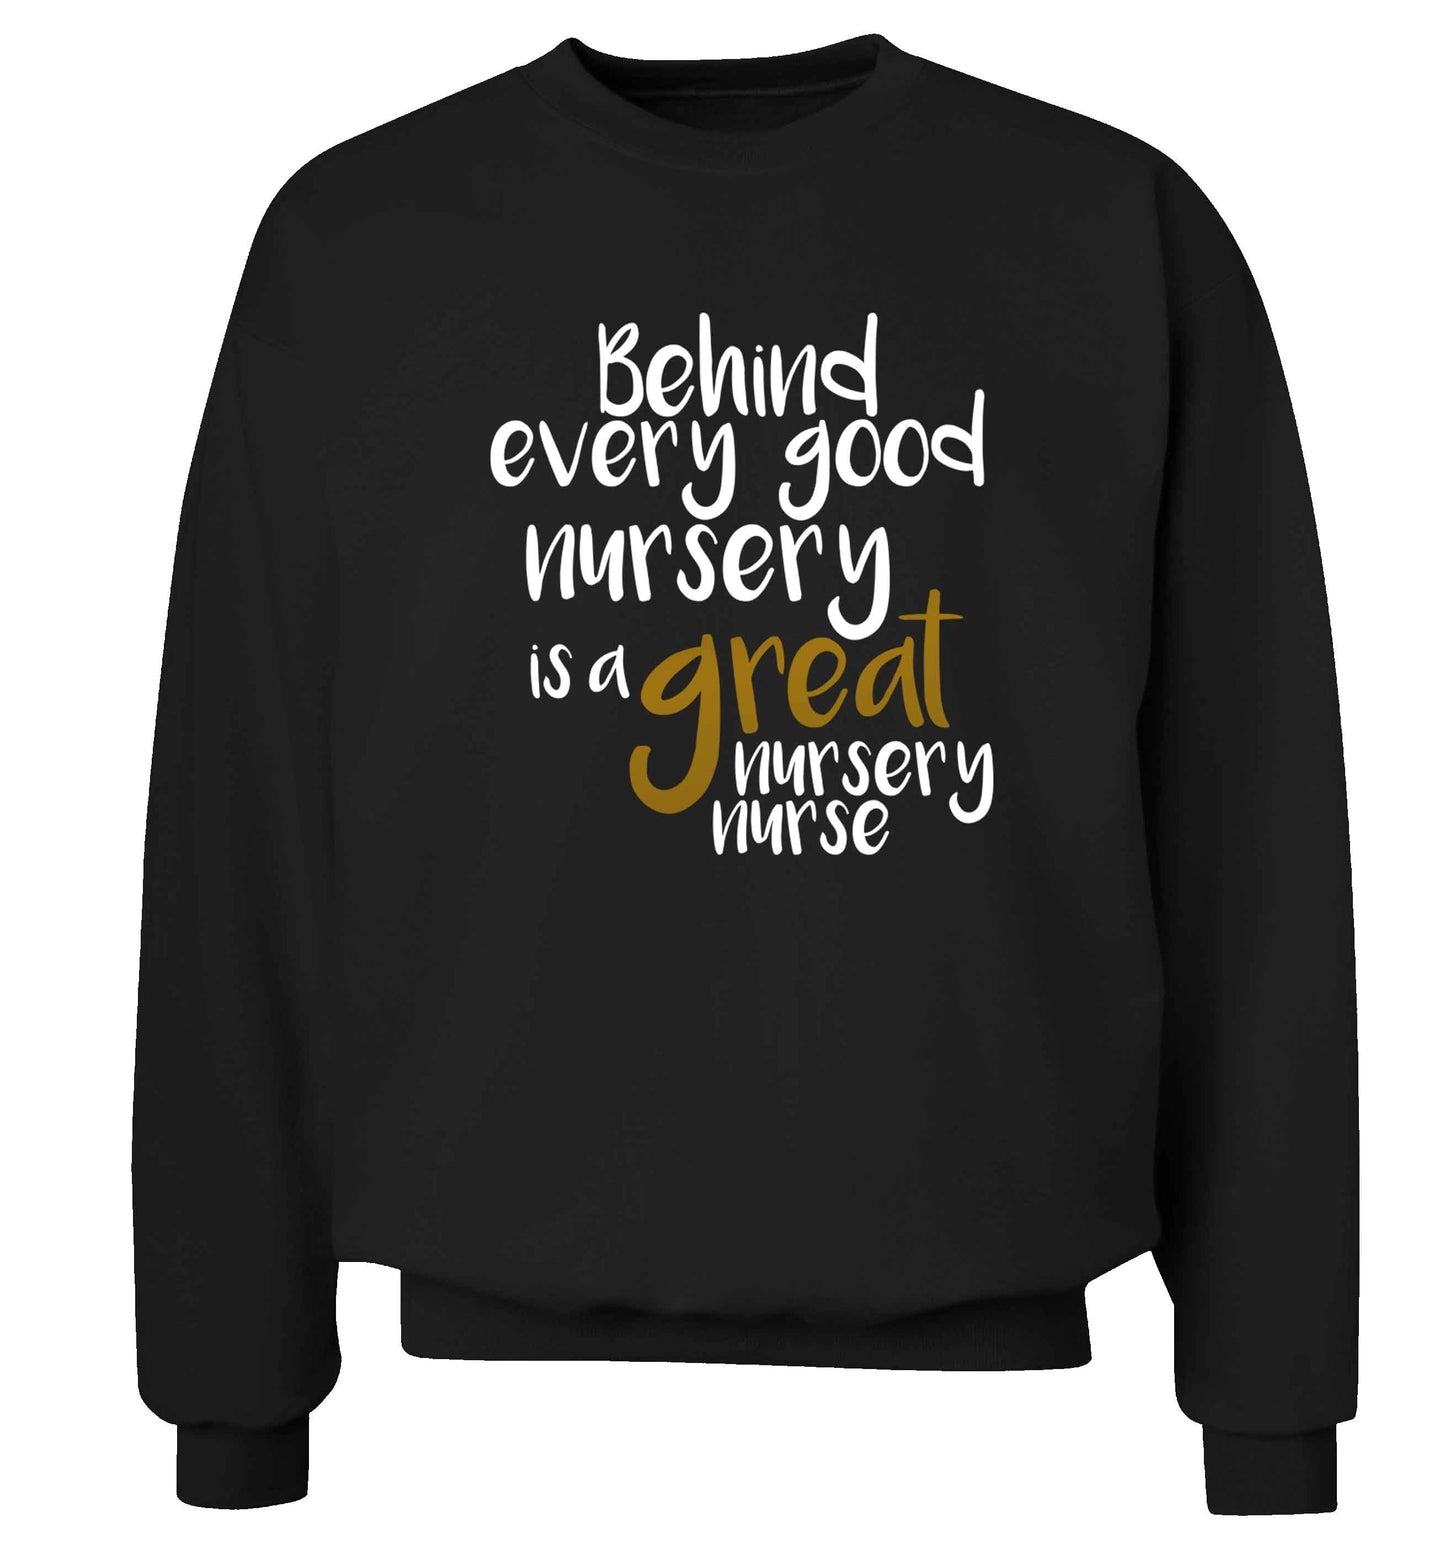 Behind every good nursery is a great nursery nurse Adult's unisex black Sweater 2XL